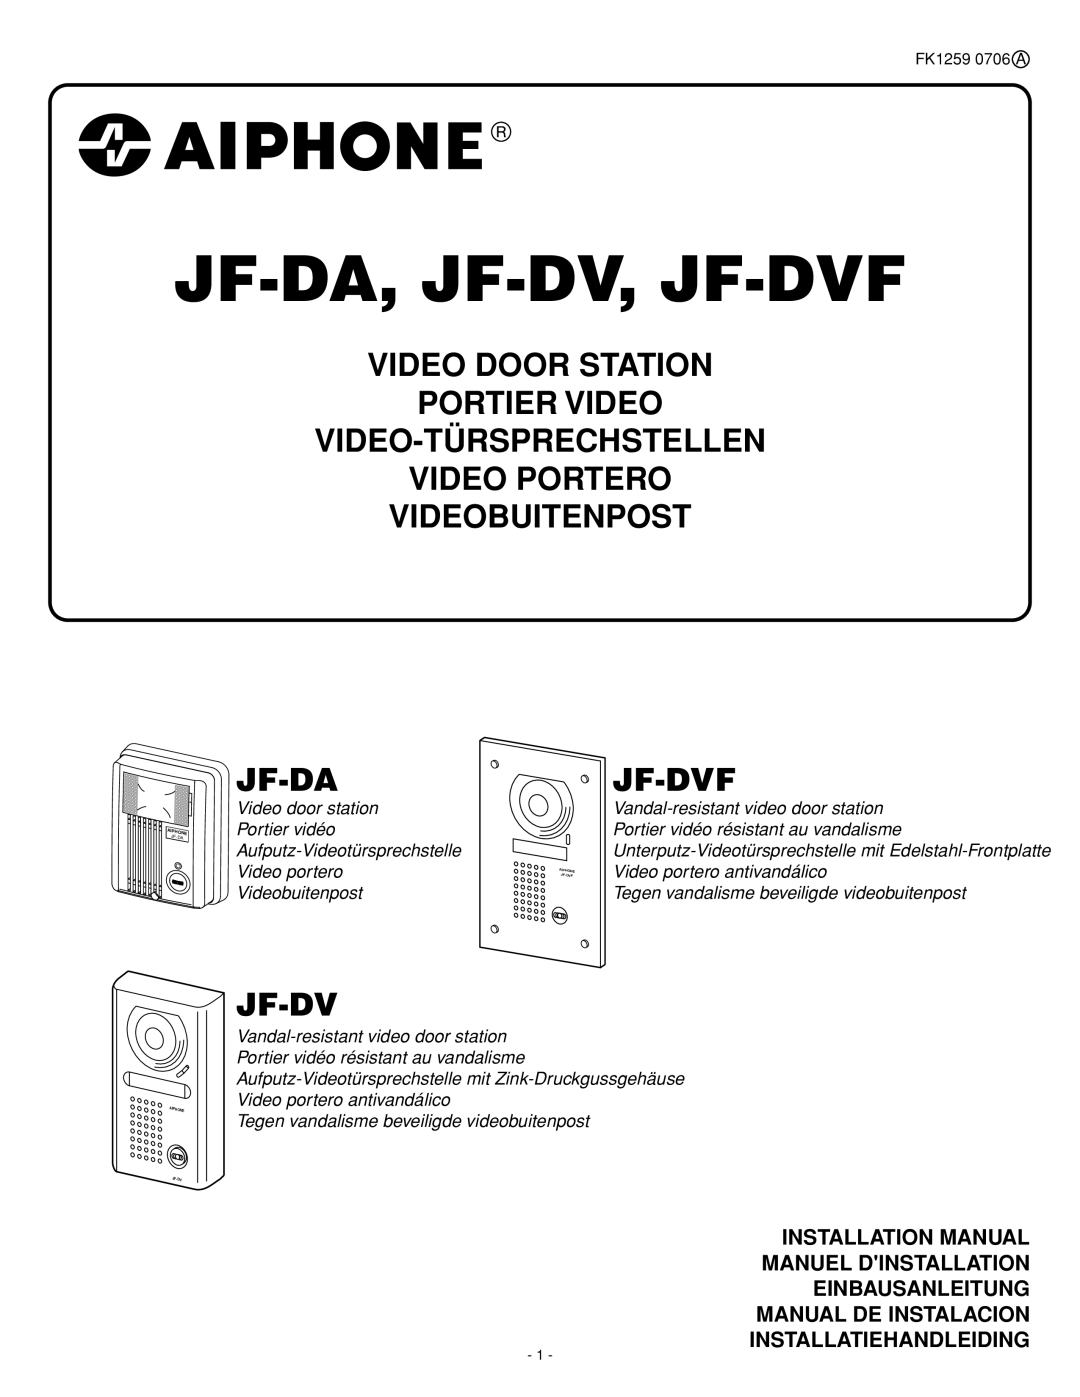 Aiphone JF-DVF installation manual Video Door Station Portier Video, Video-Türsprechstellen Video Portero, Videobuitenpost 